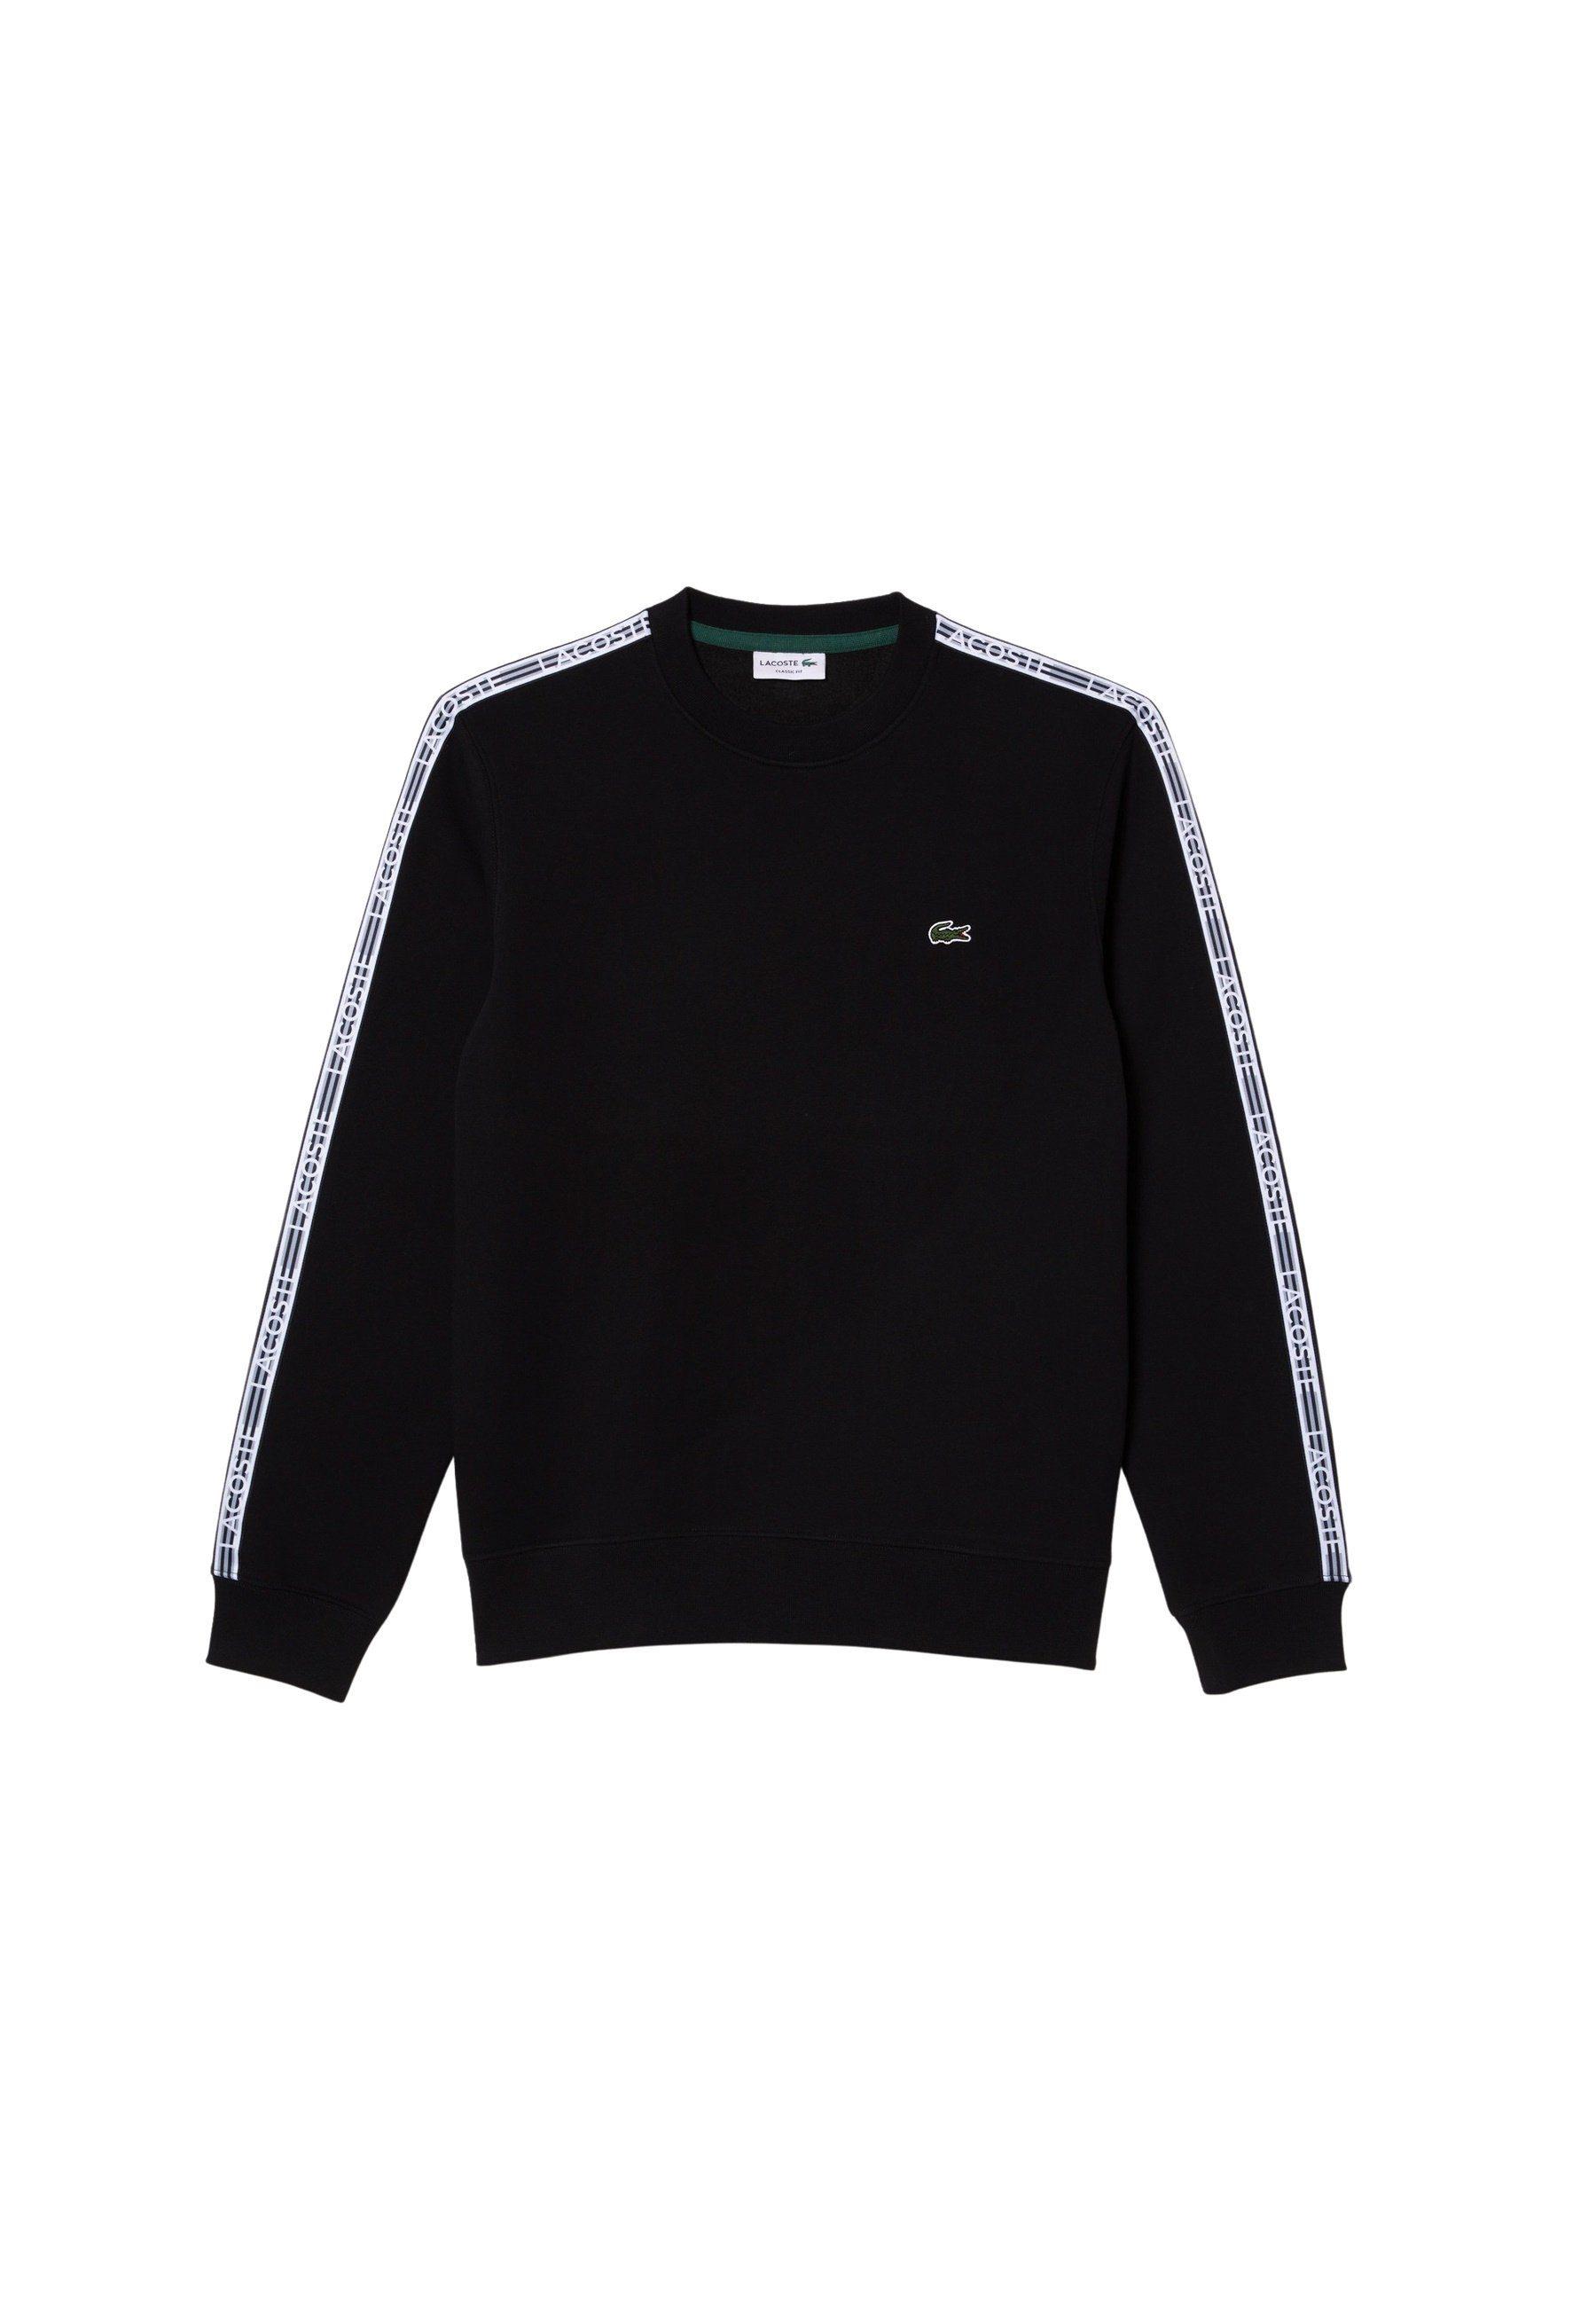 Lacoste Sweatshirt Pullover Sweatshirt mit Logostreifen 031 noir